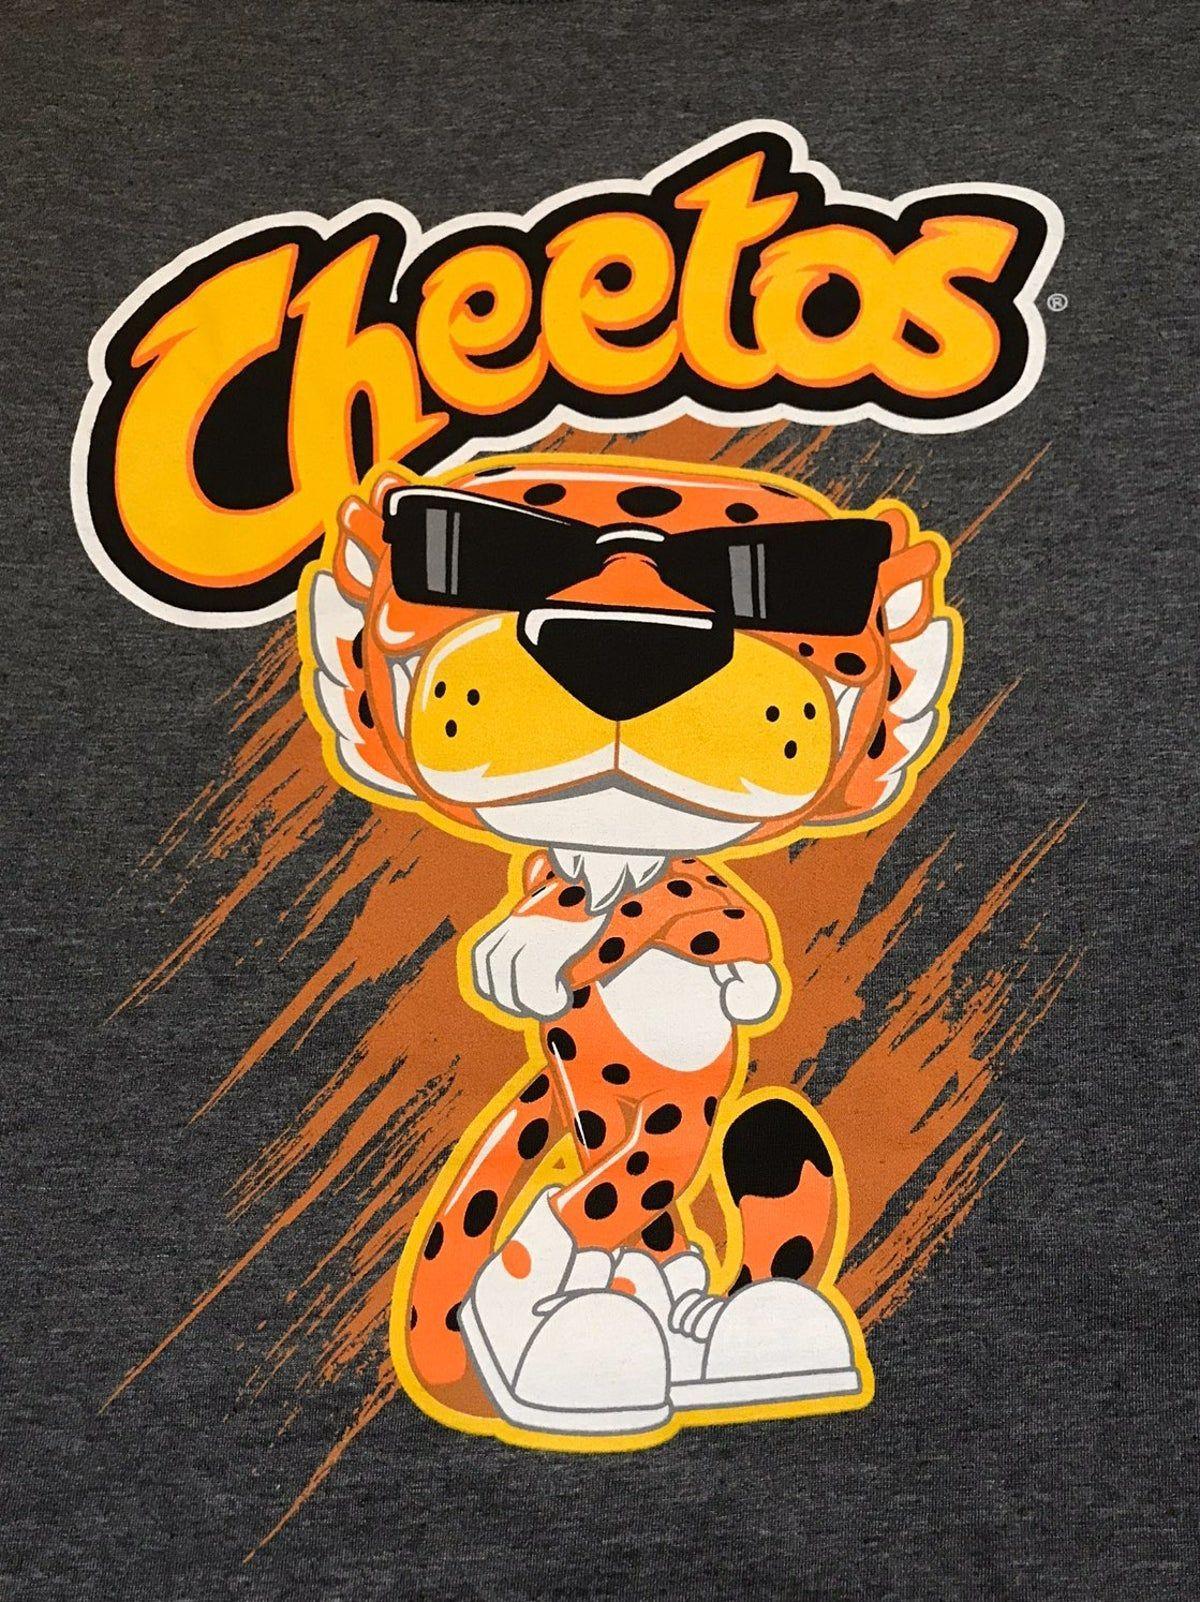 Chester Cheetah Wallpaper Free Chester Cheetah Background